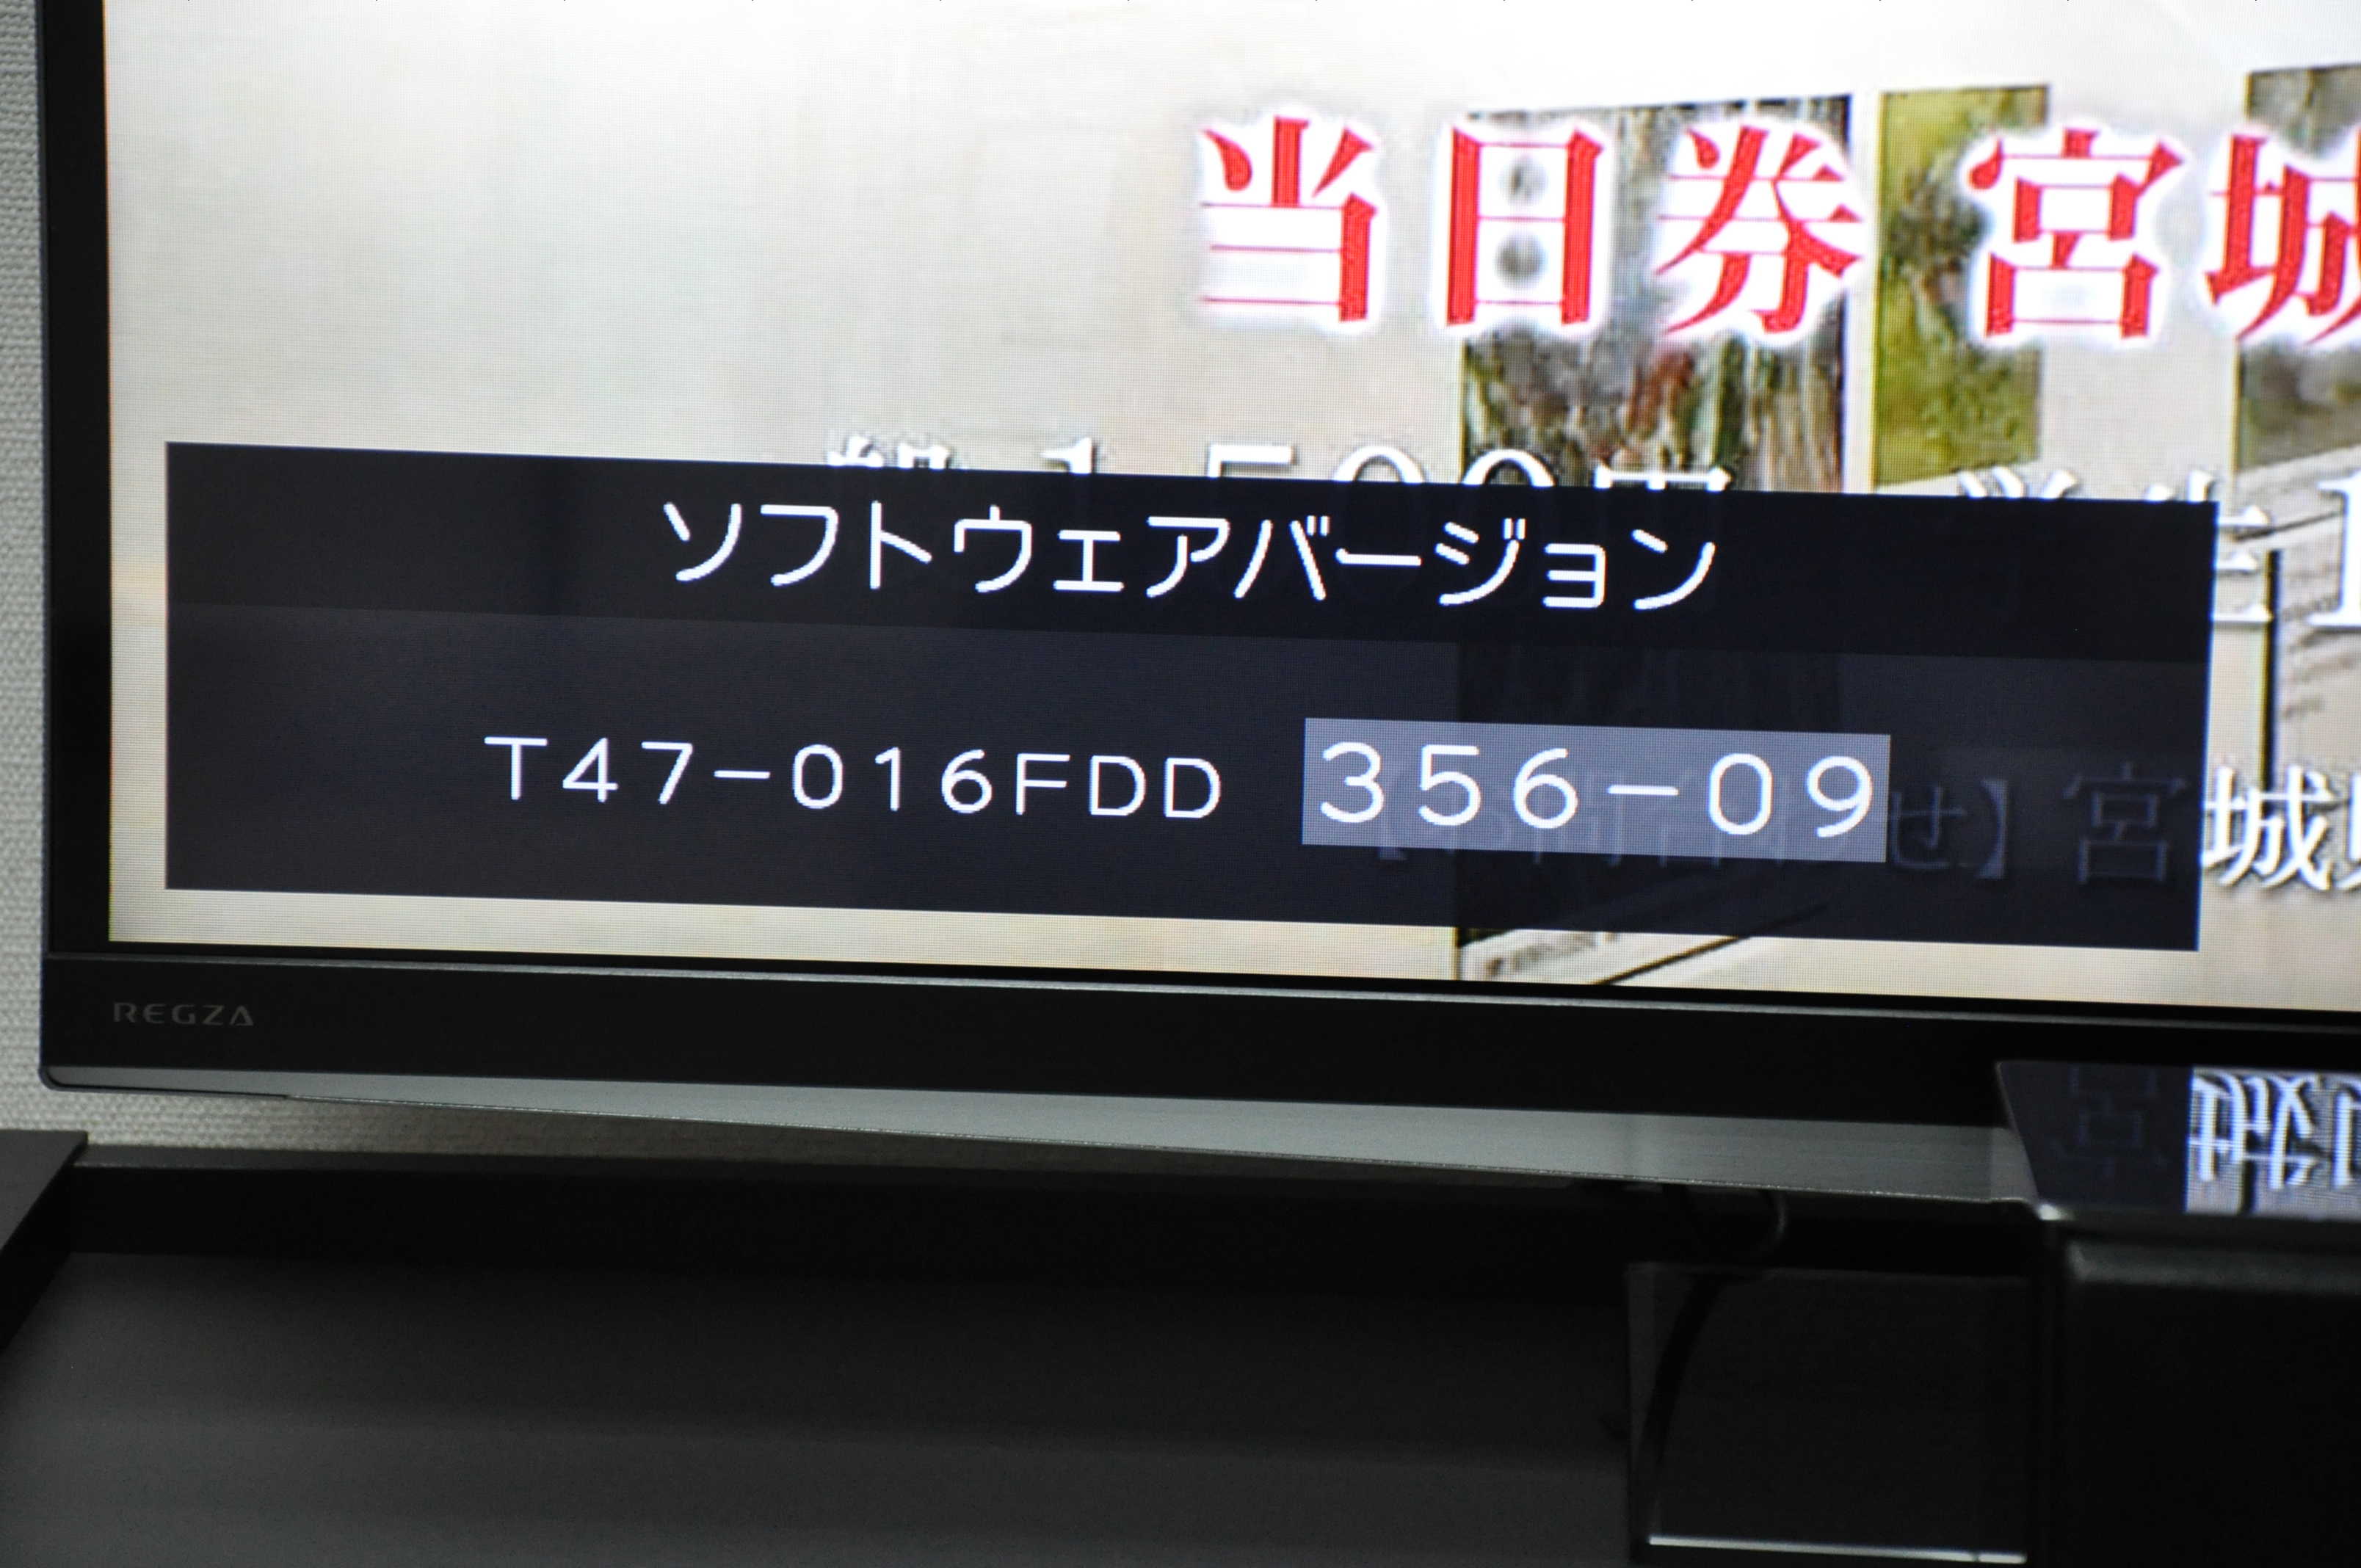 TOSHIBA REGZA 42Z7 ネットワーク設定が勝手に変わる不具合(3) | にーまるろく あーるしー どっと ねっと